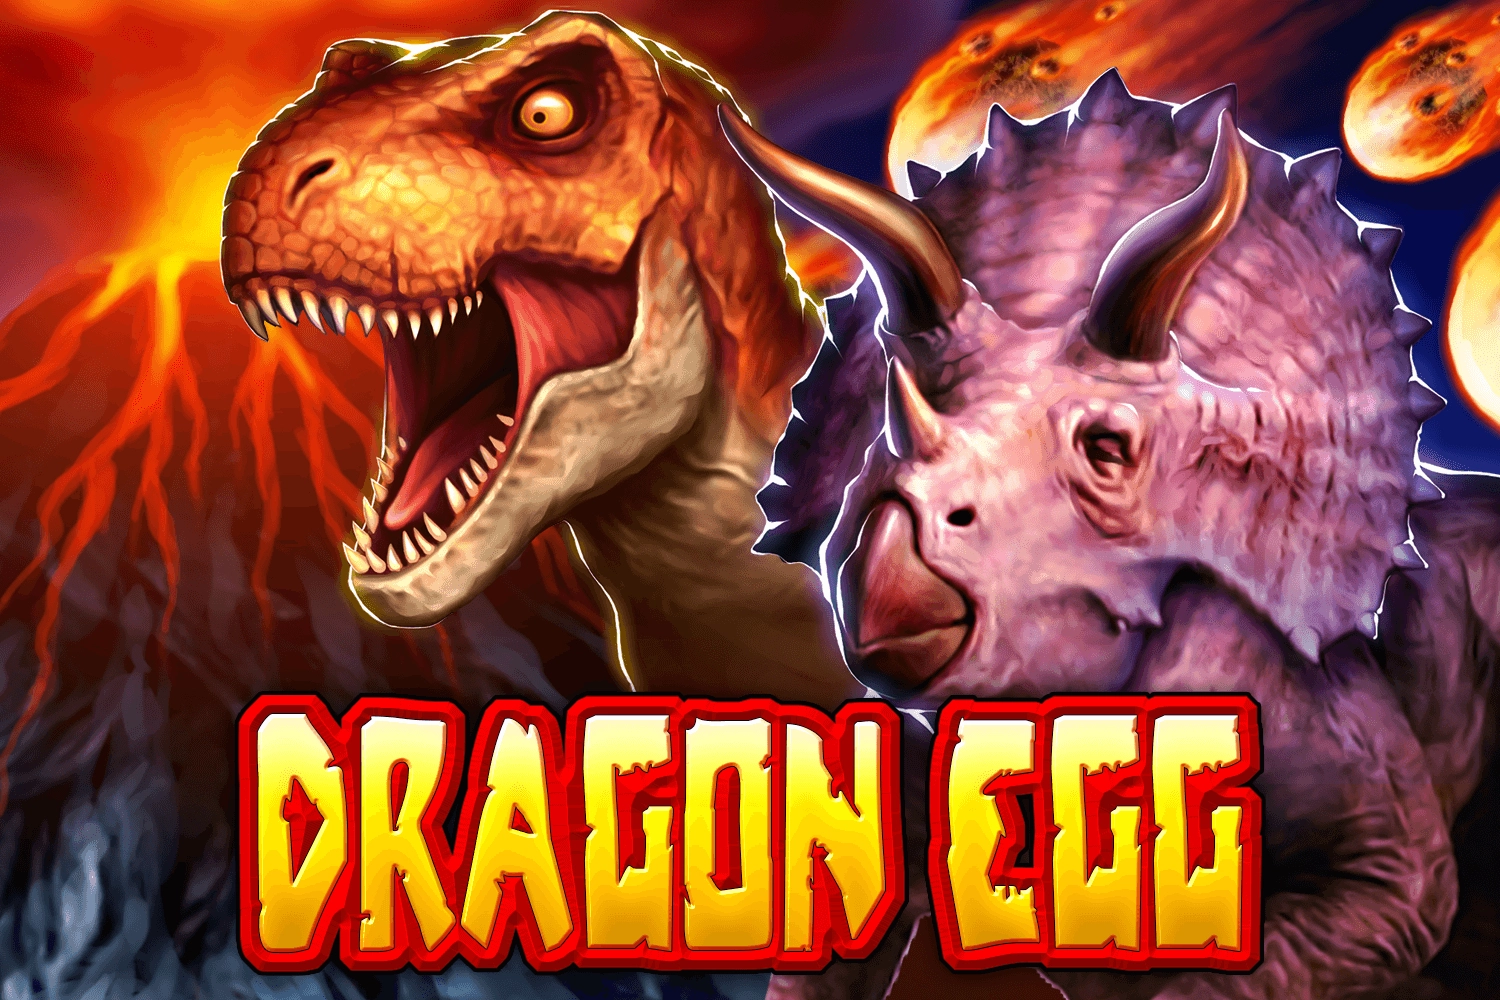 Dragon Egg Slot